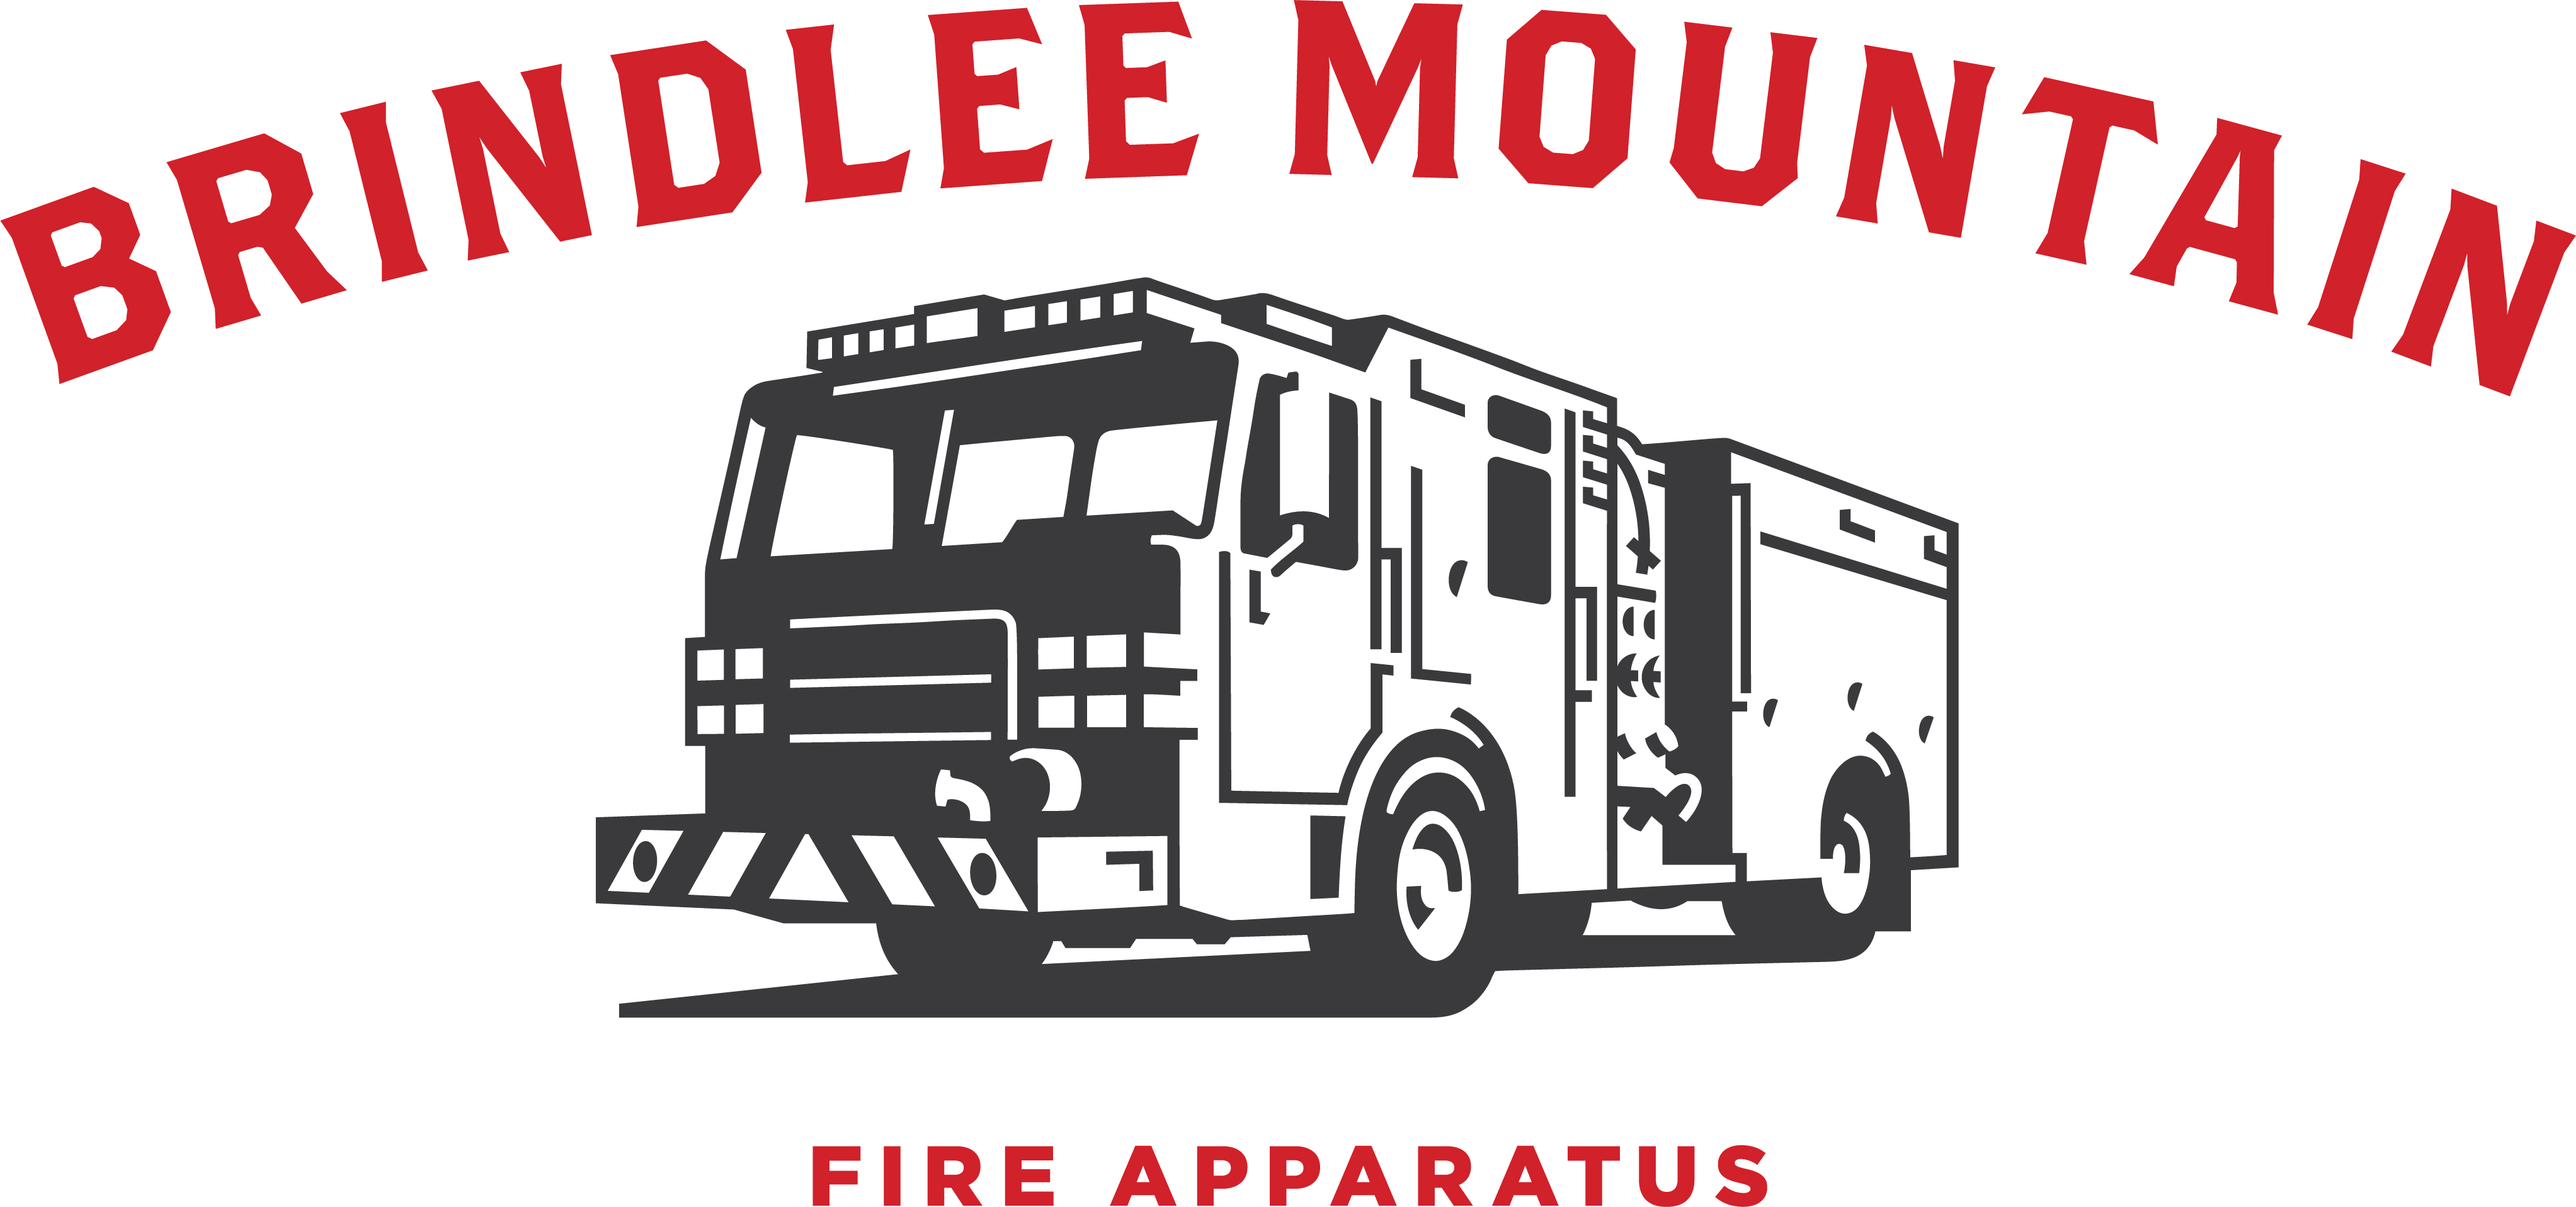 Brindlee Mountain Fire Apparatus logo